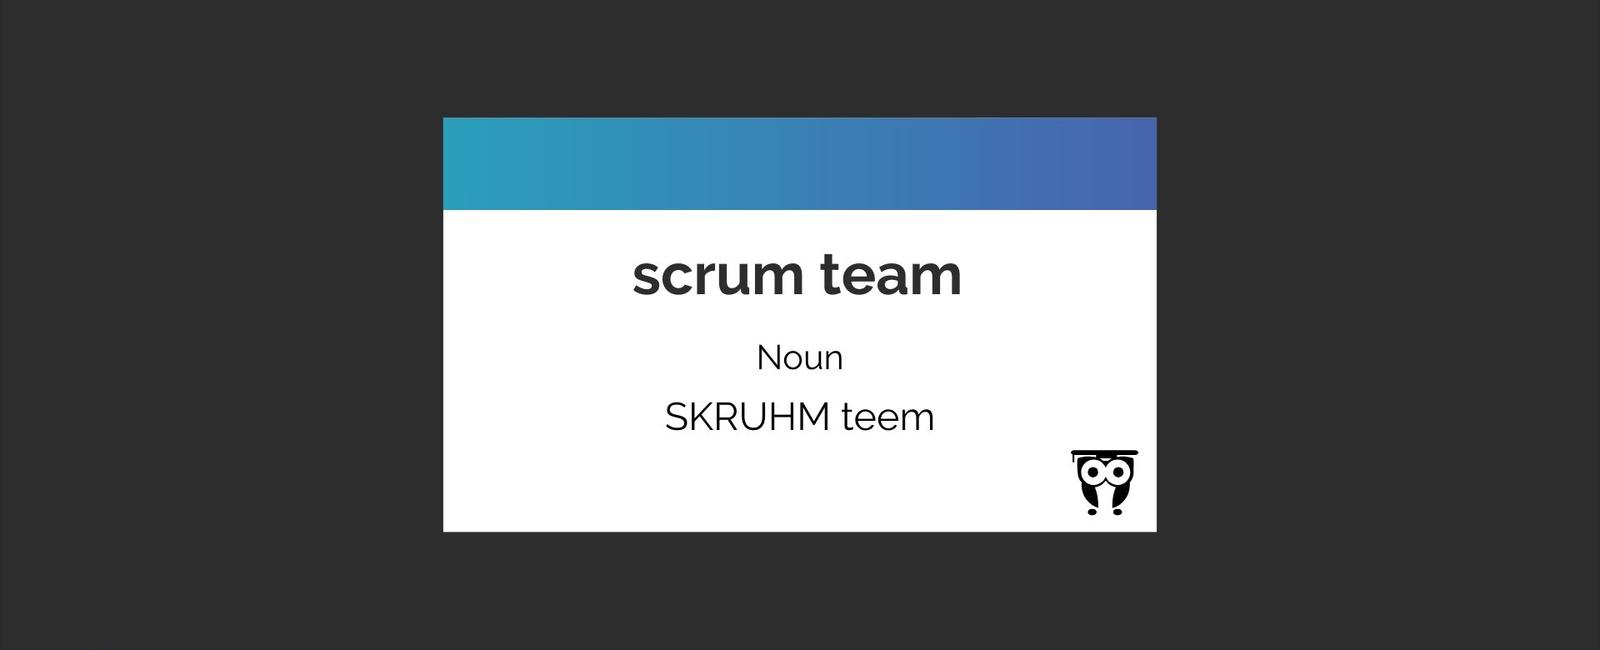 Scrum Team